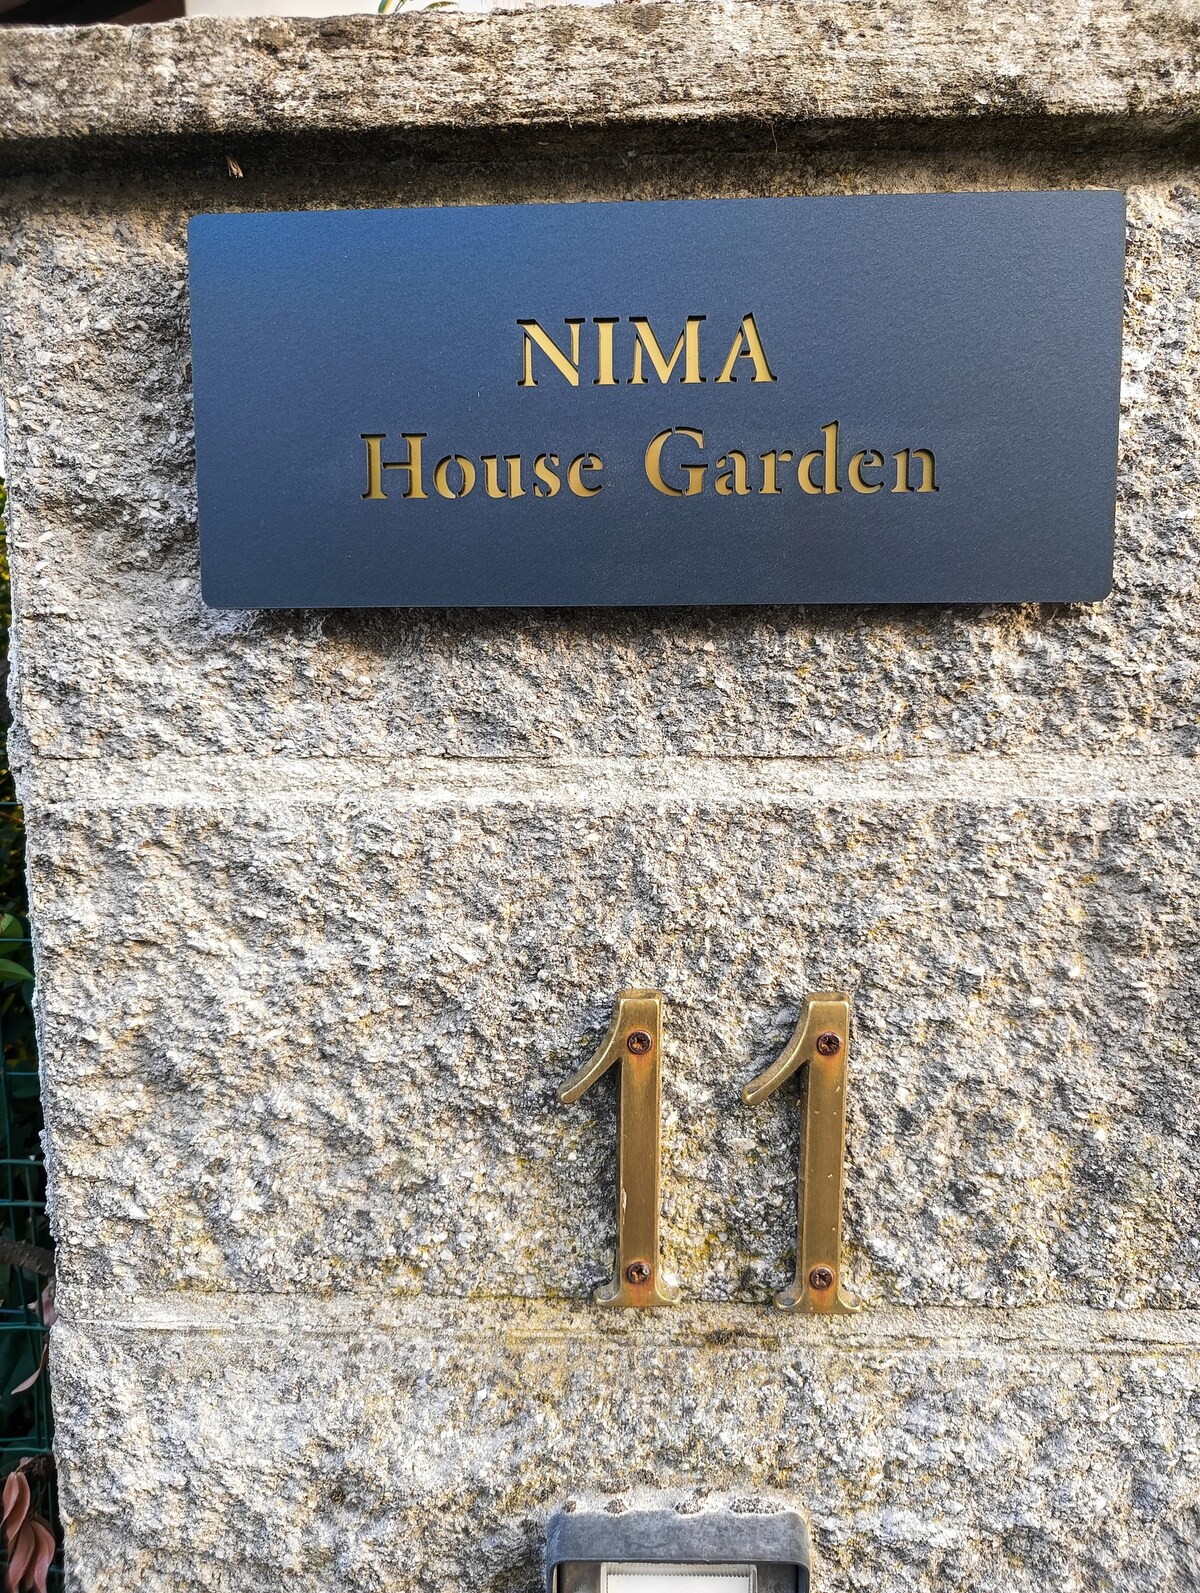 NIMA House Garden